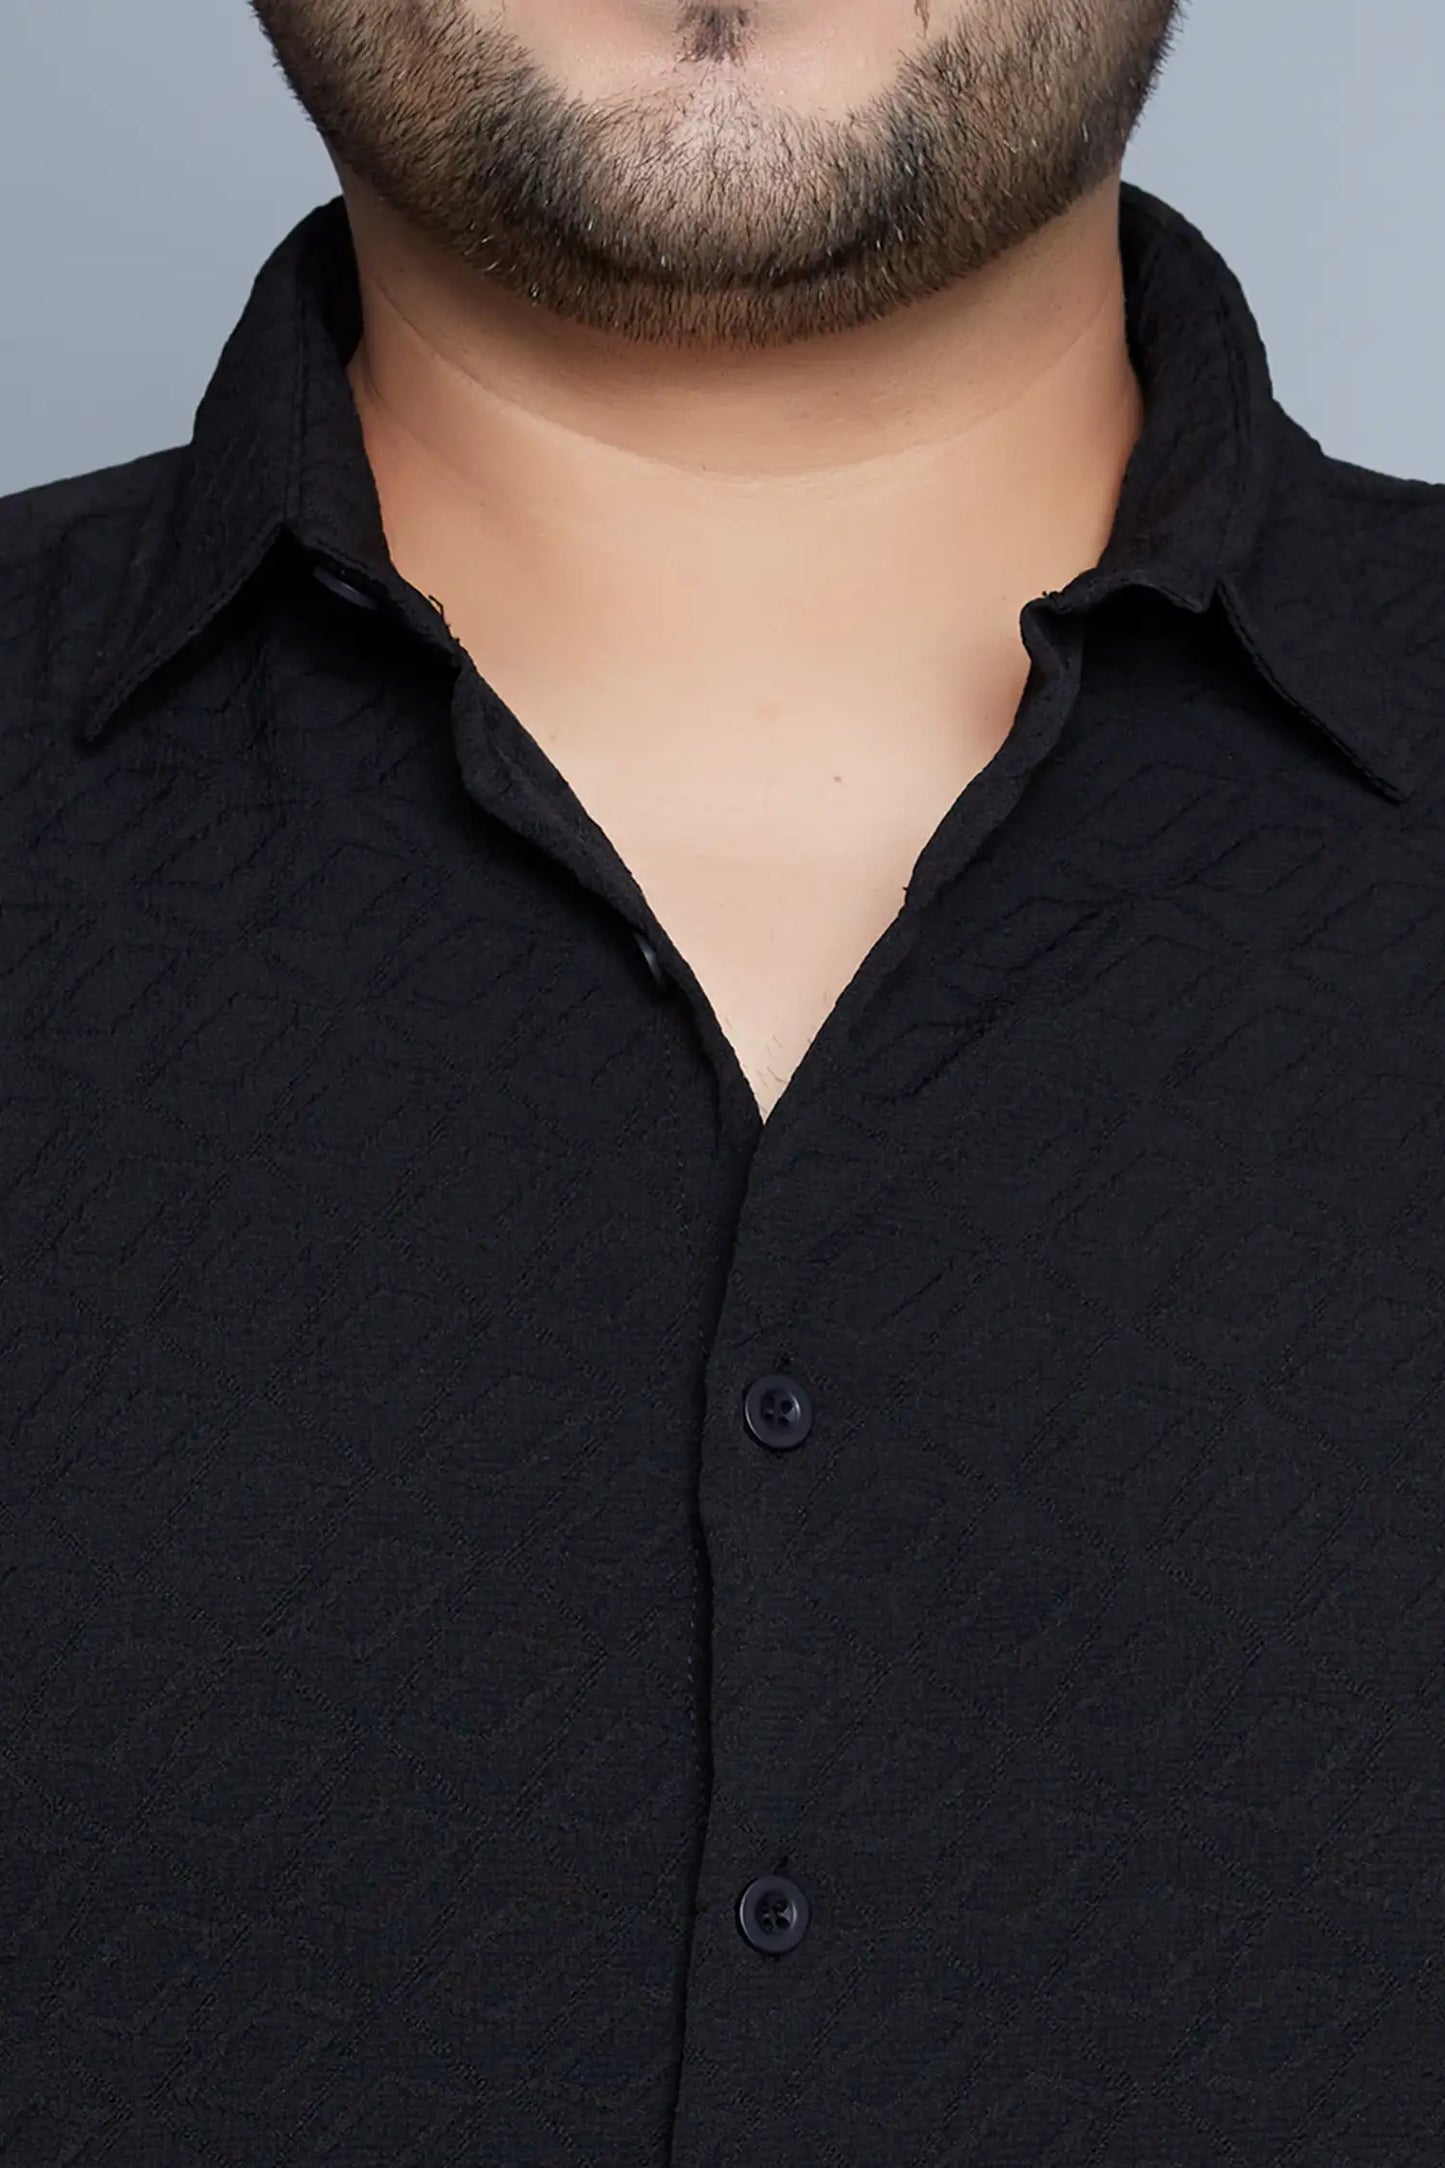 Black Plus Size Shirt for Men